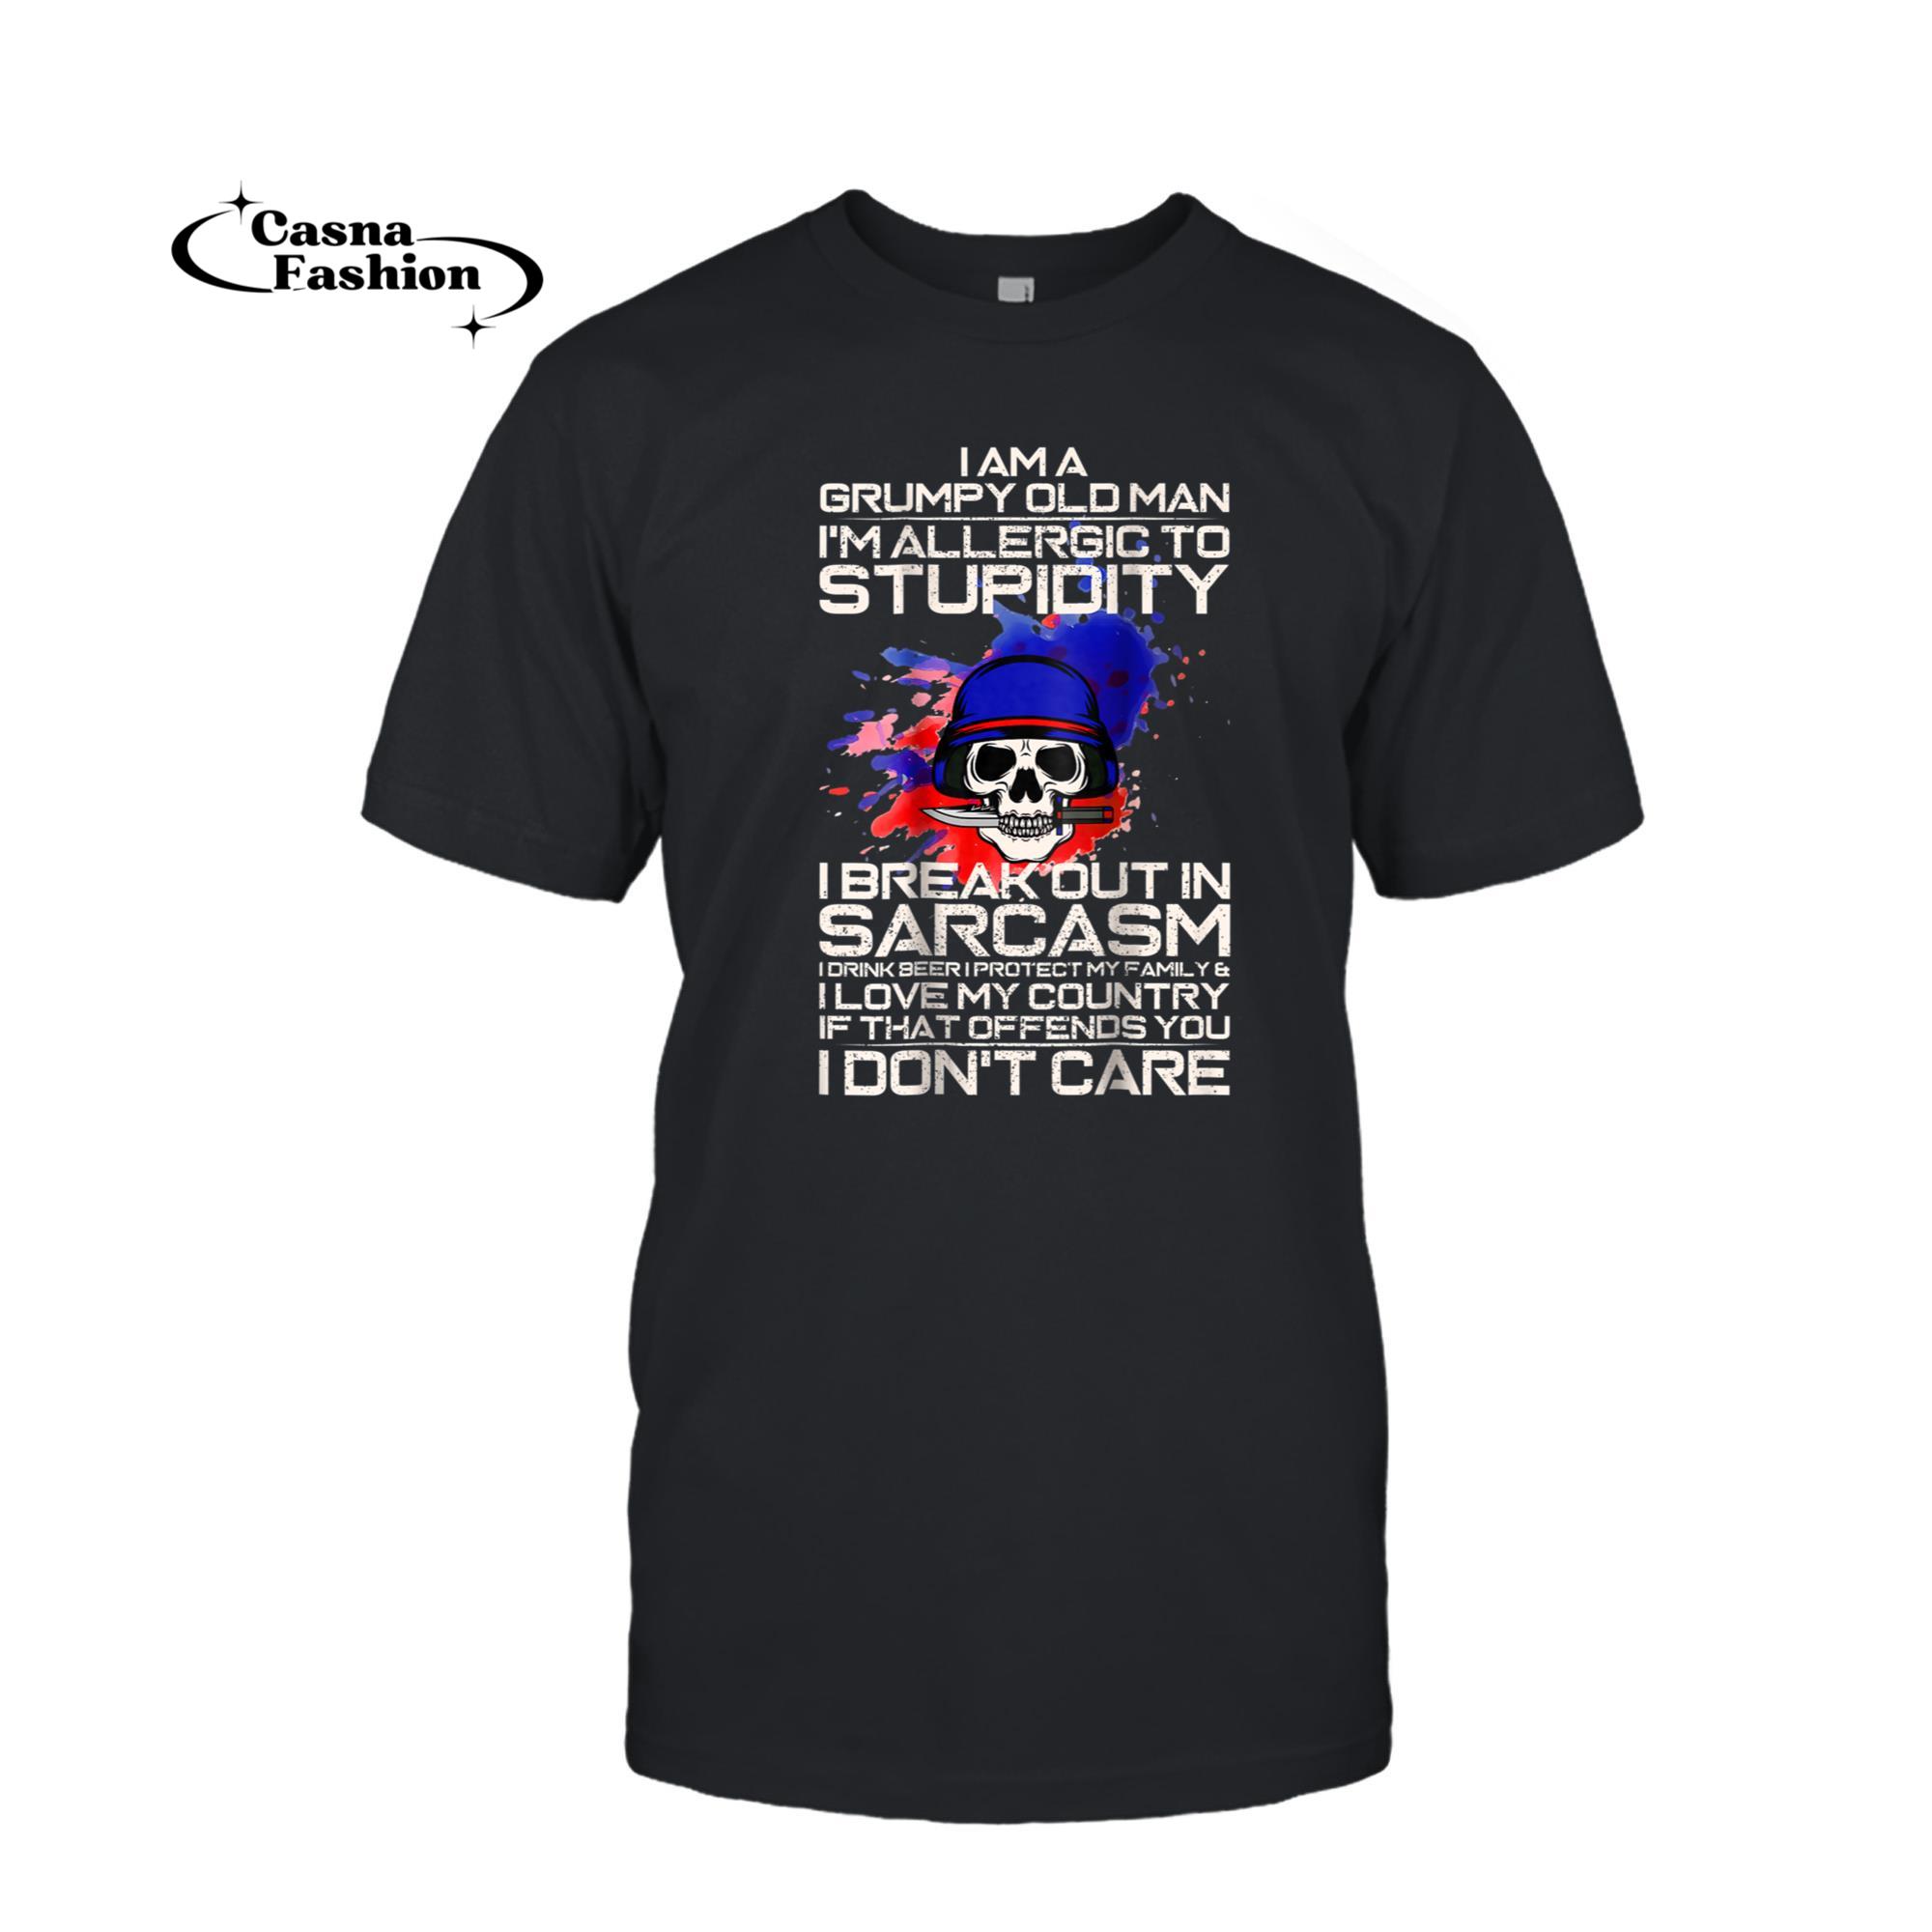 casnafashion_T-shirt_I Am A Grumpy Old Man I'm Allergic To Stupidity, Etc T-Shirt_T-shirt_Black